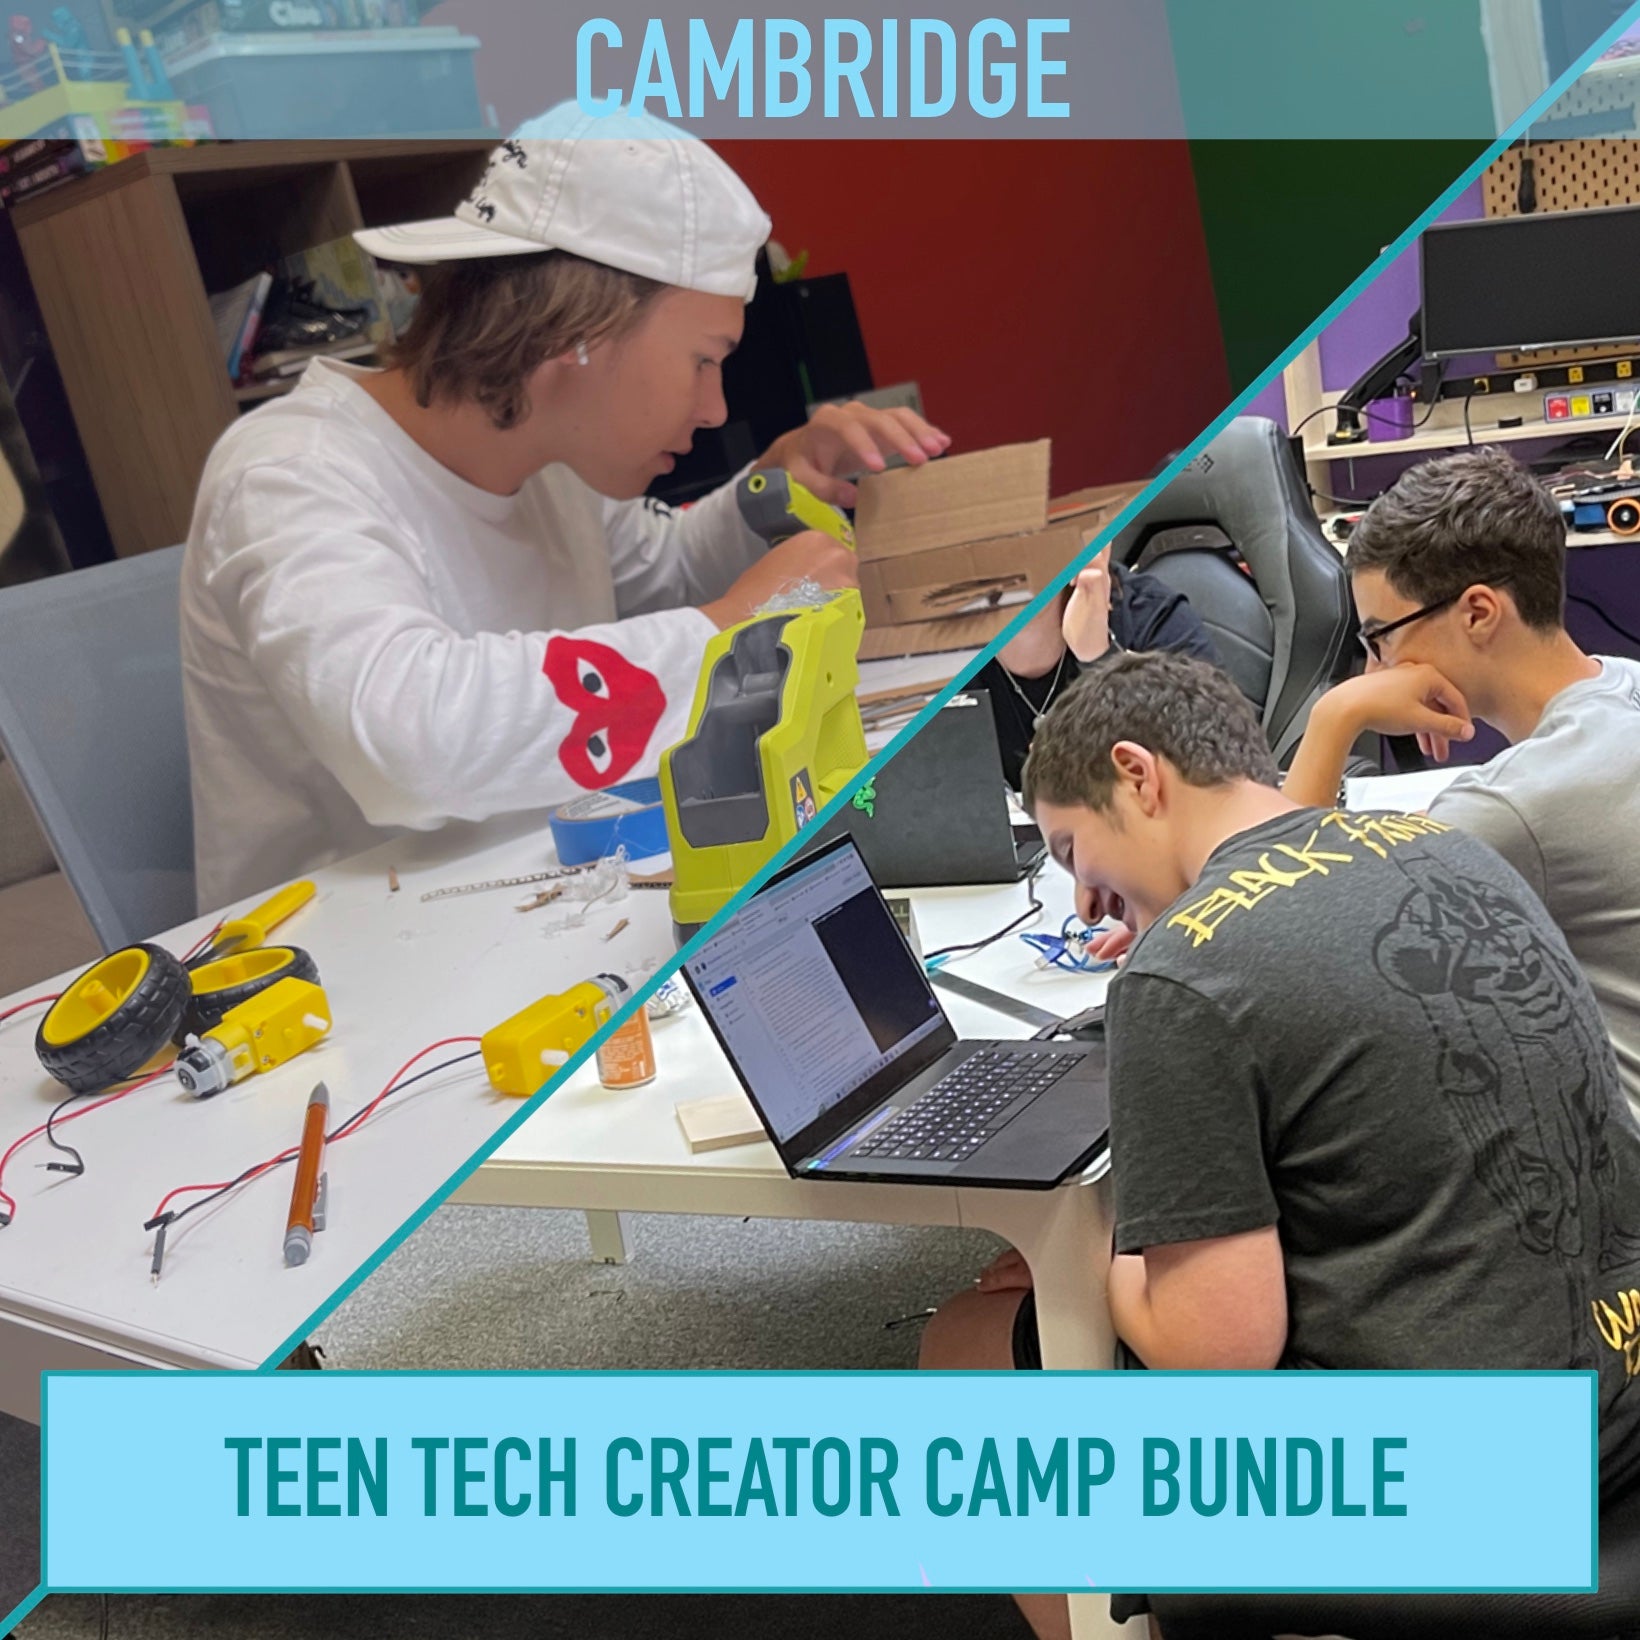 Teen Tech Creator Summer Camp Bundle (Cambridge)